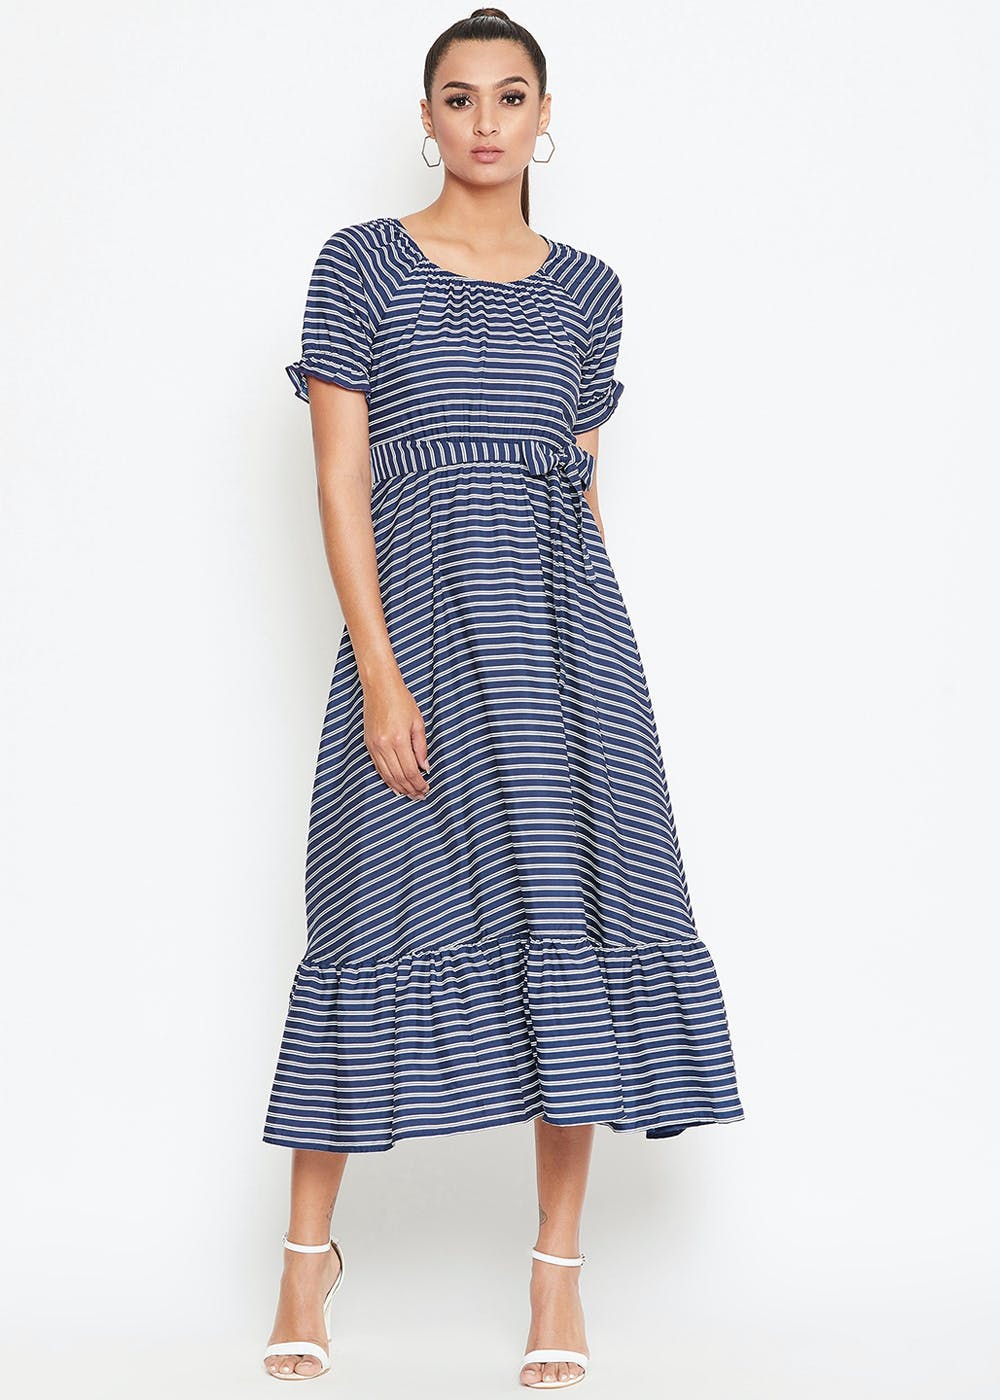 Waist Tie Detail Blue & White Striped A-Line Dress